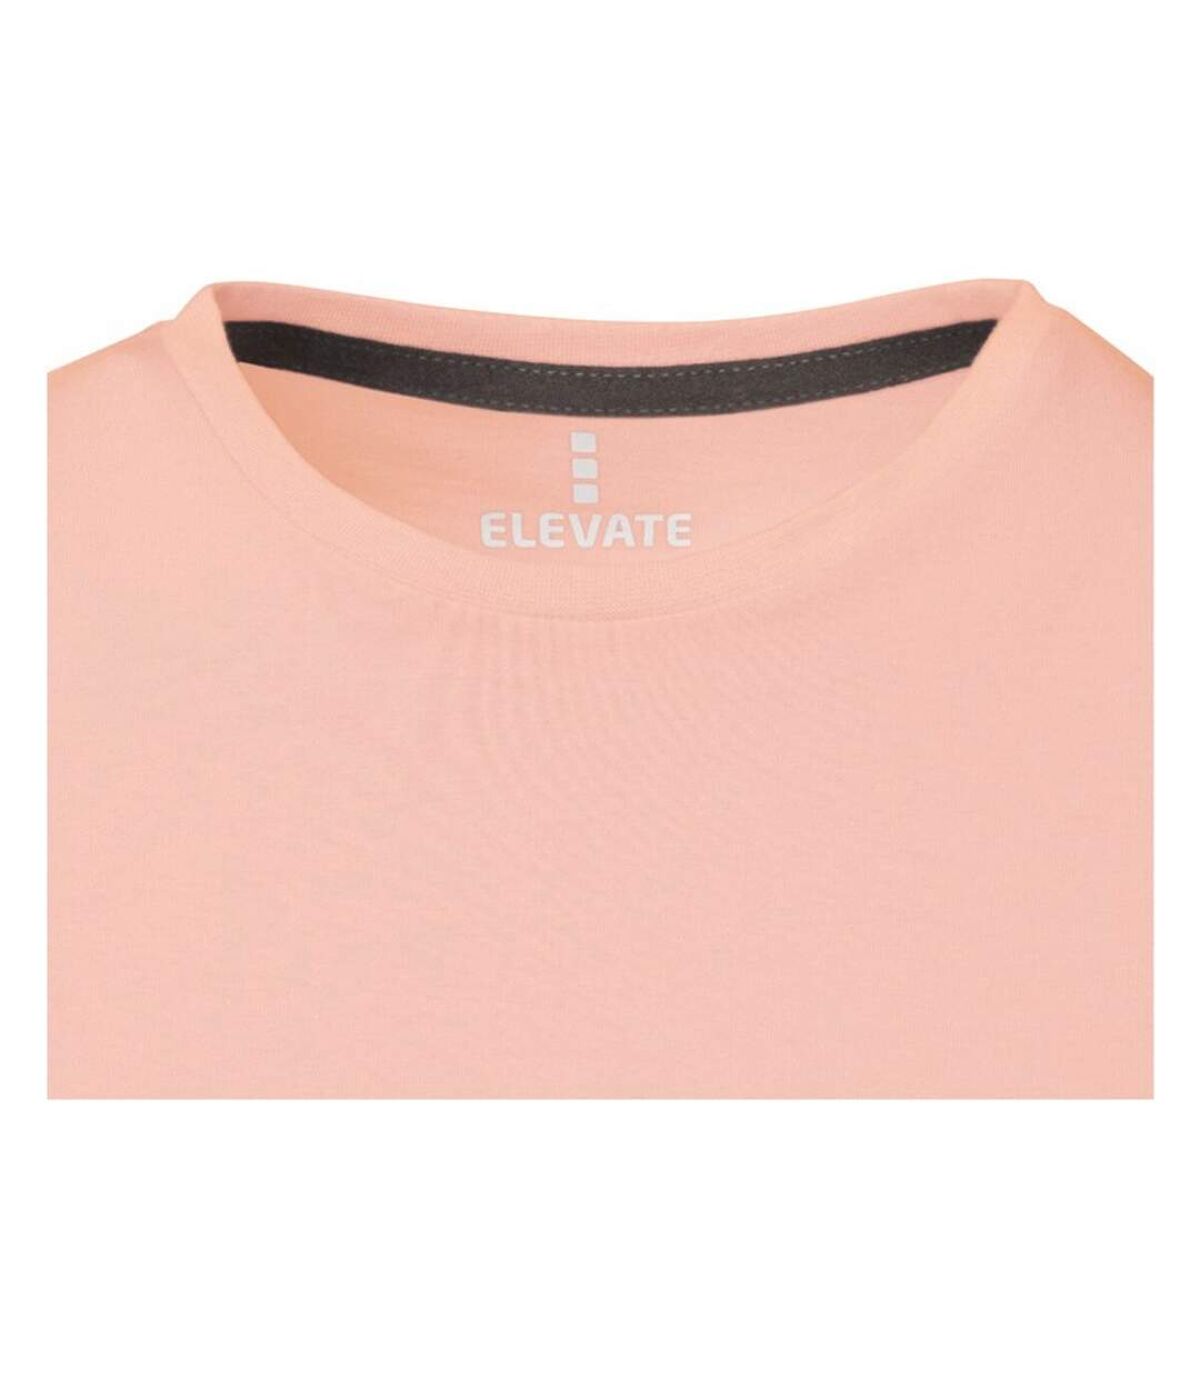 Elevate - T-shirt manches courtes Nanaimo - Femme (Rose pâle) - UTPF1808